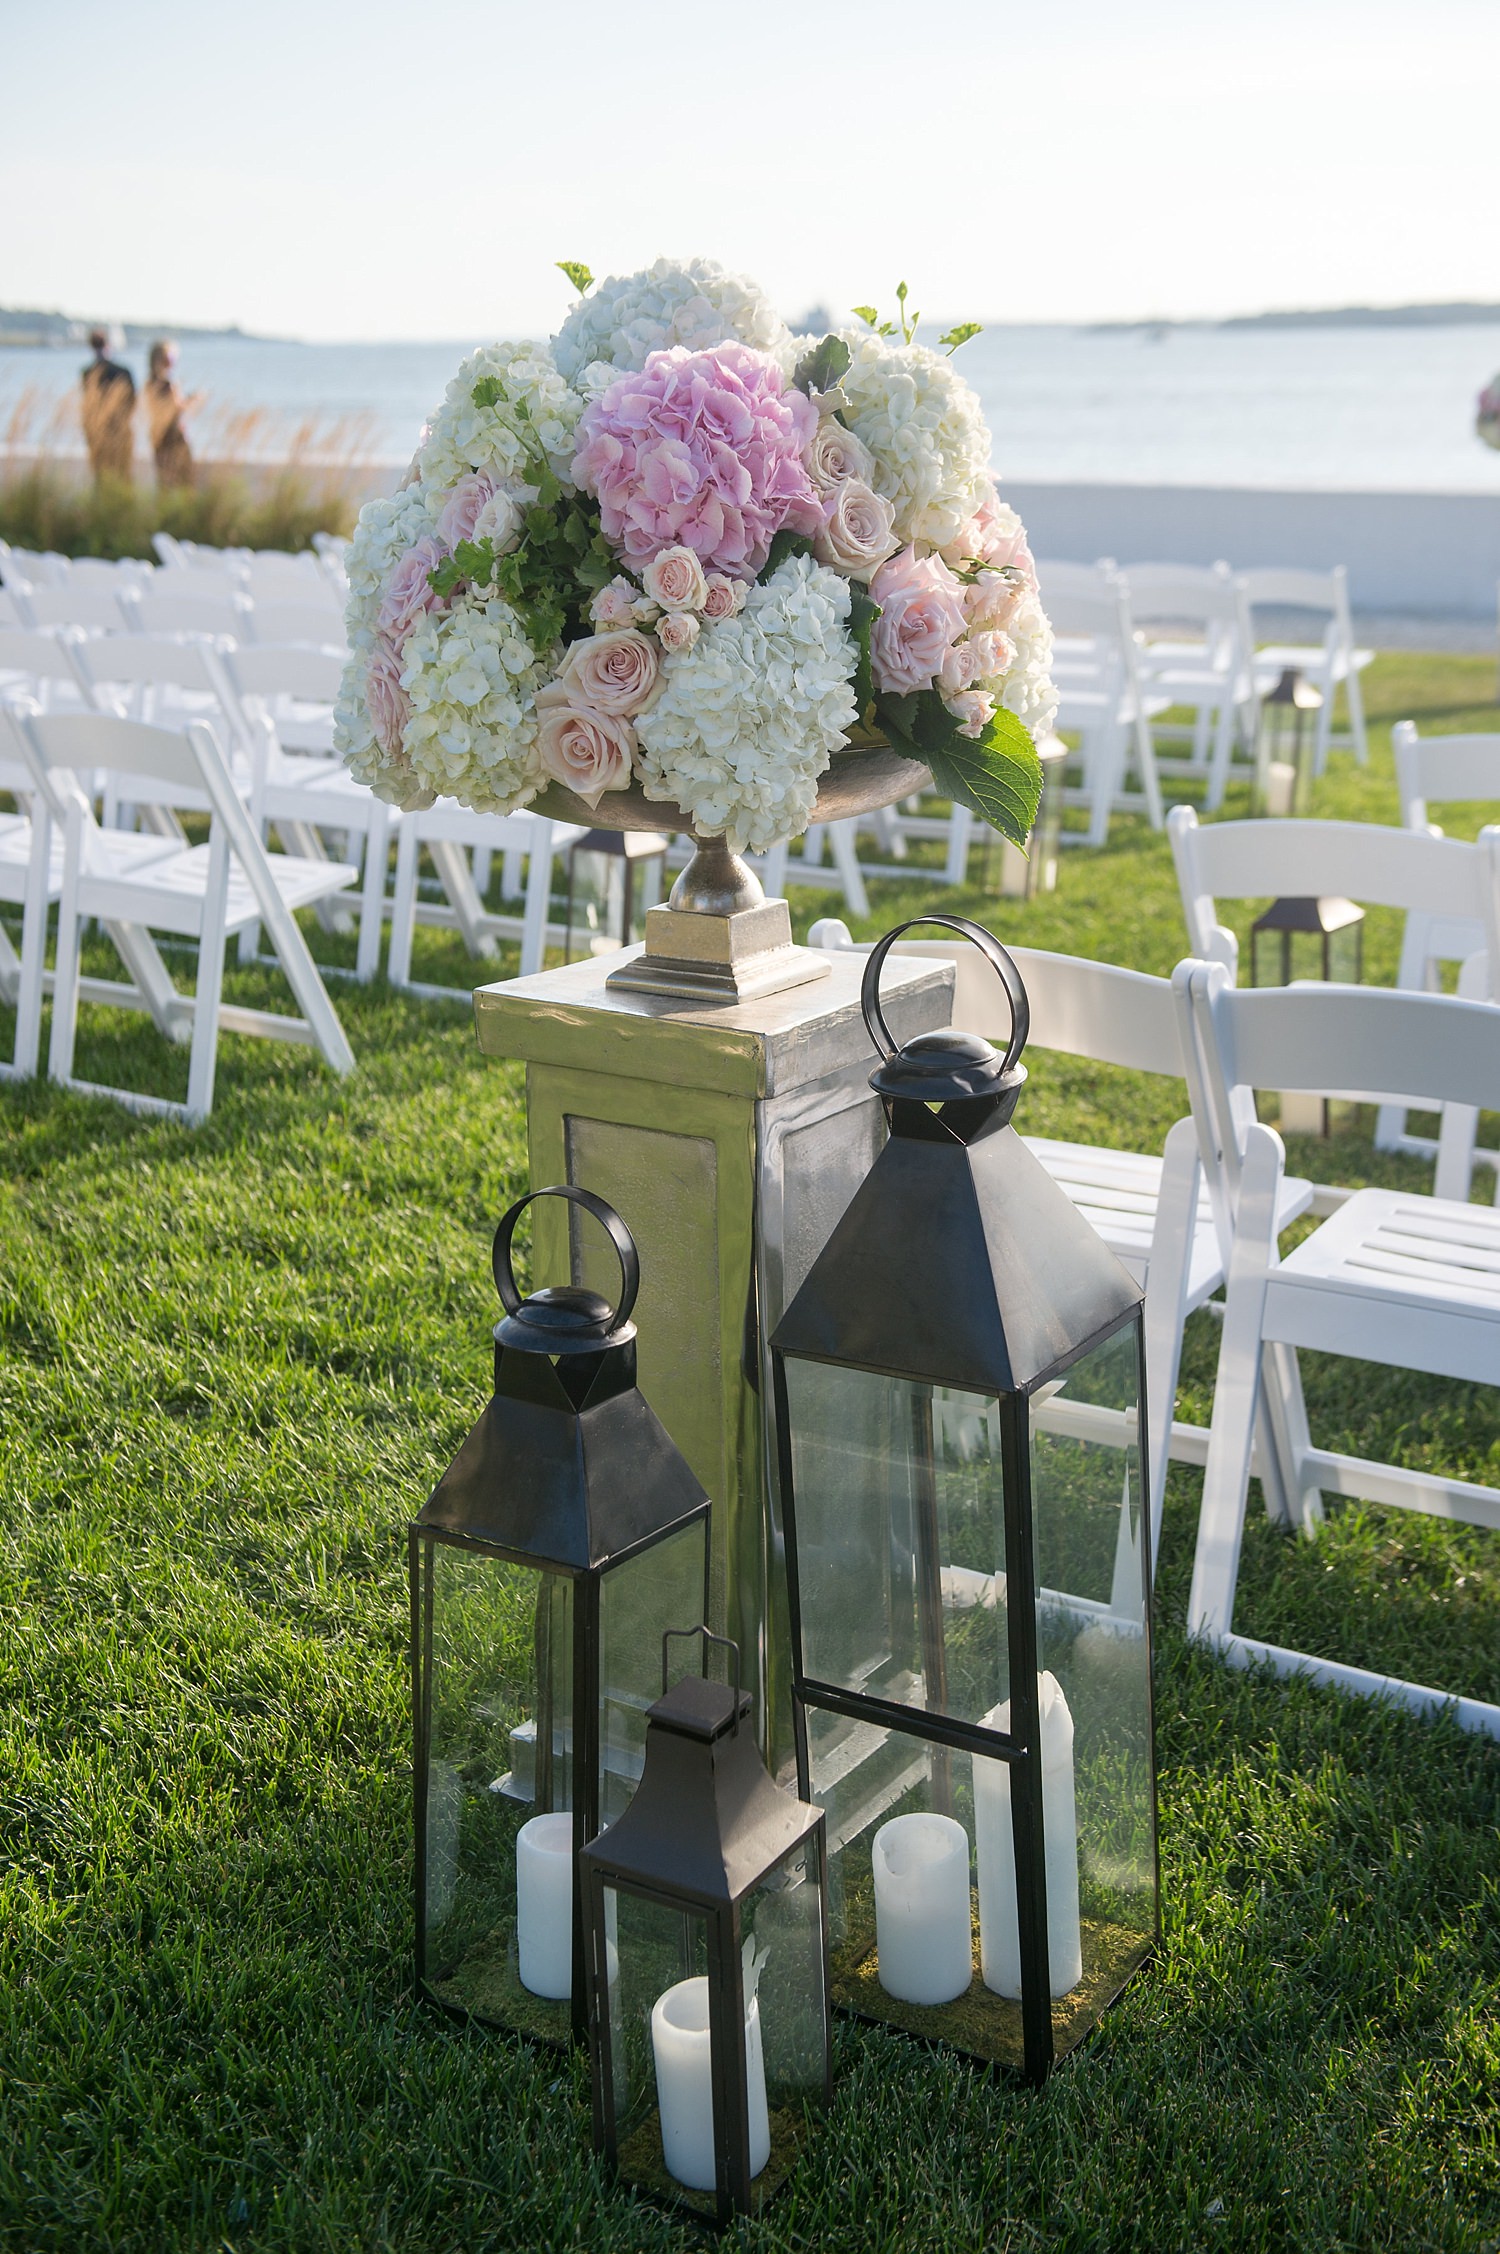 Nautical style wedding at Belle Mer in Newport, RI